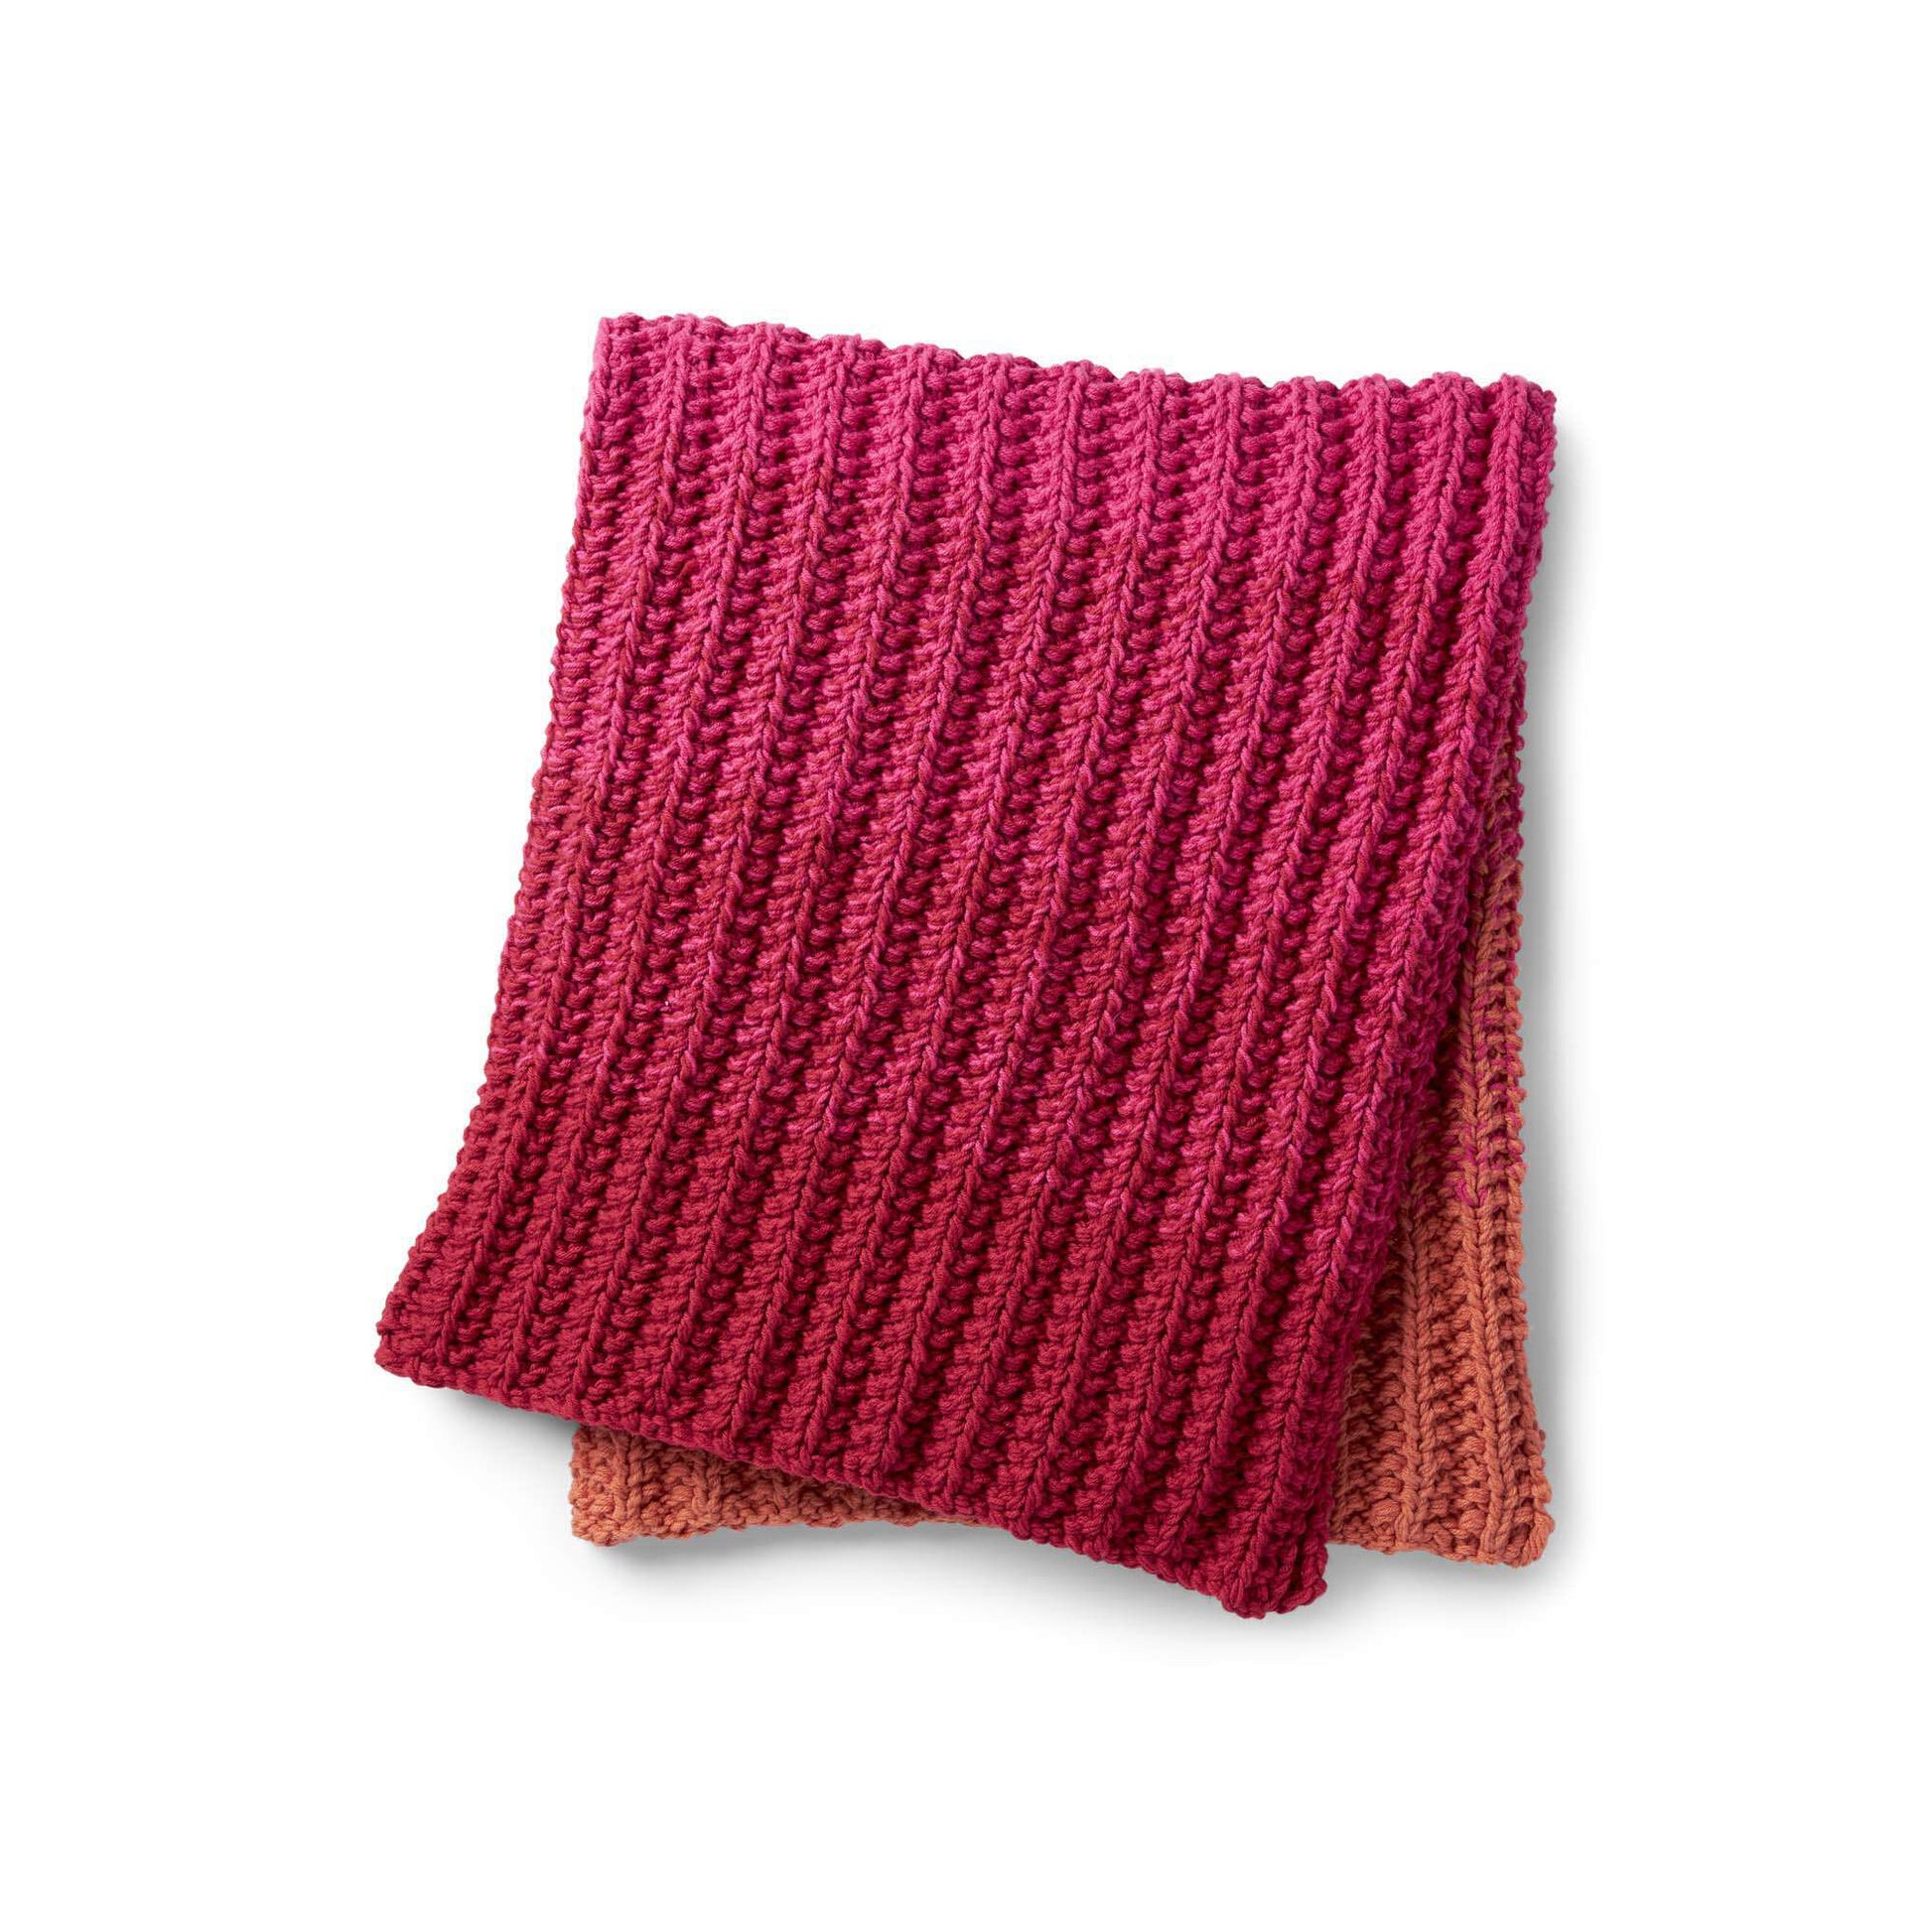 Free Caron Ombre Ridge Knit Blanket Pattern